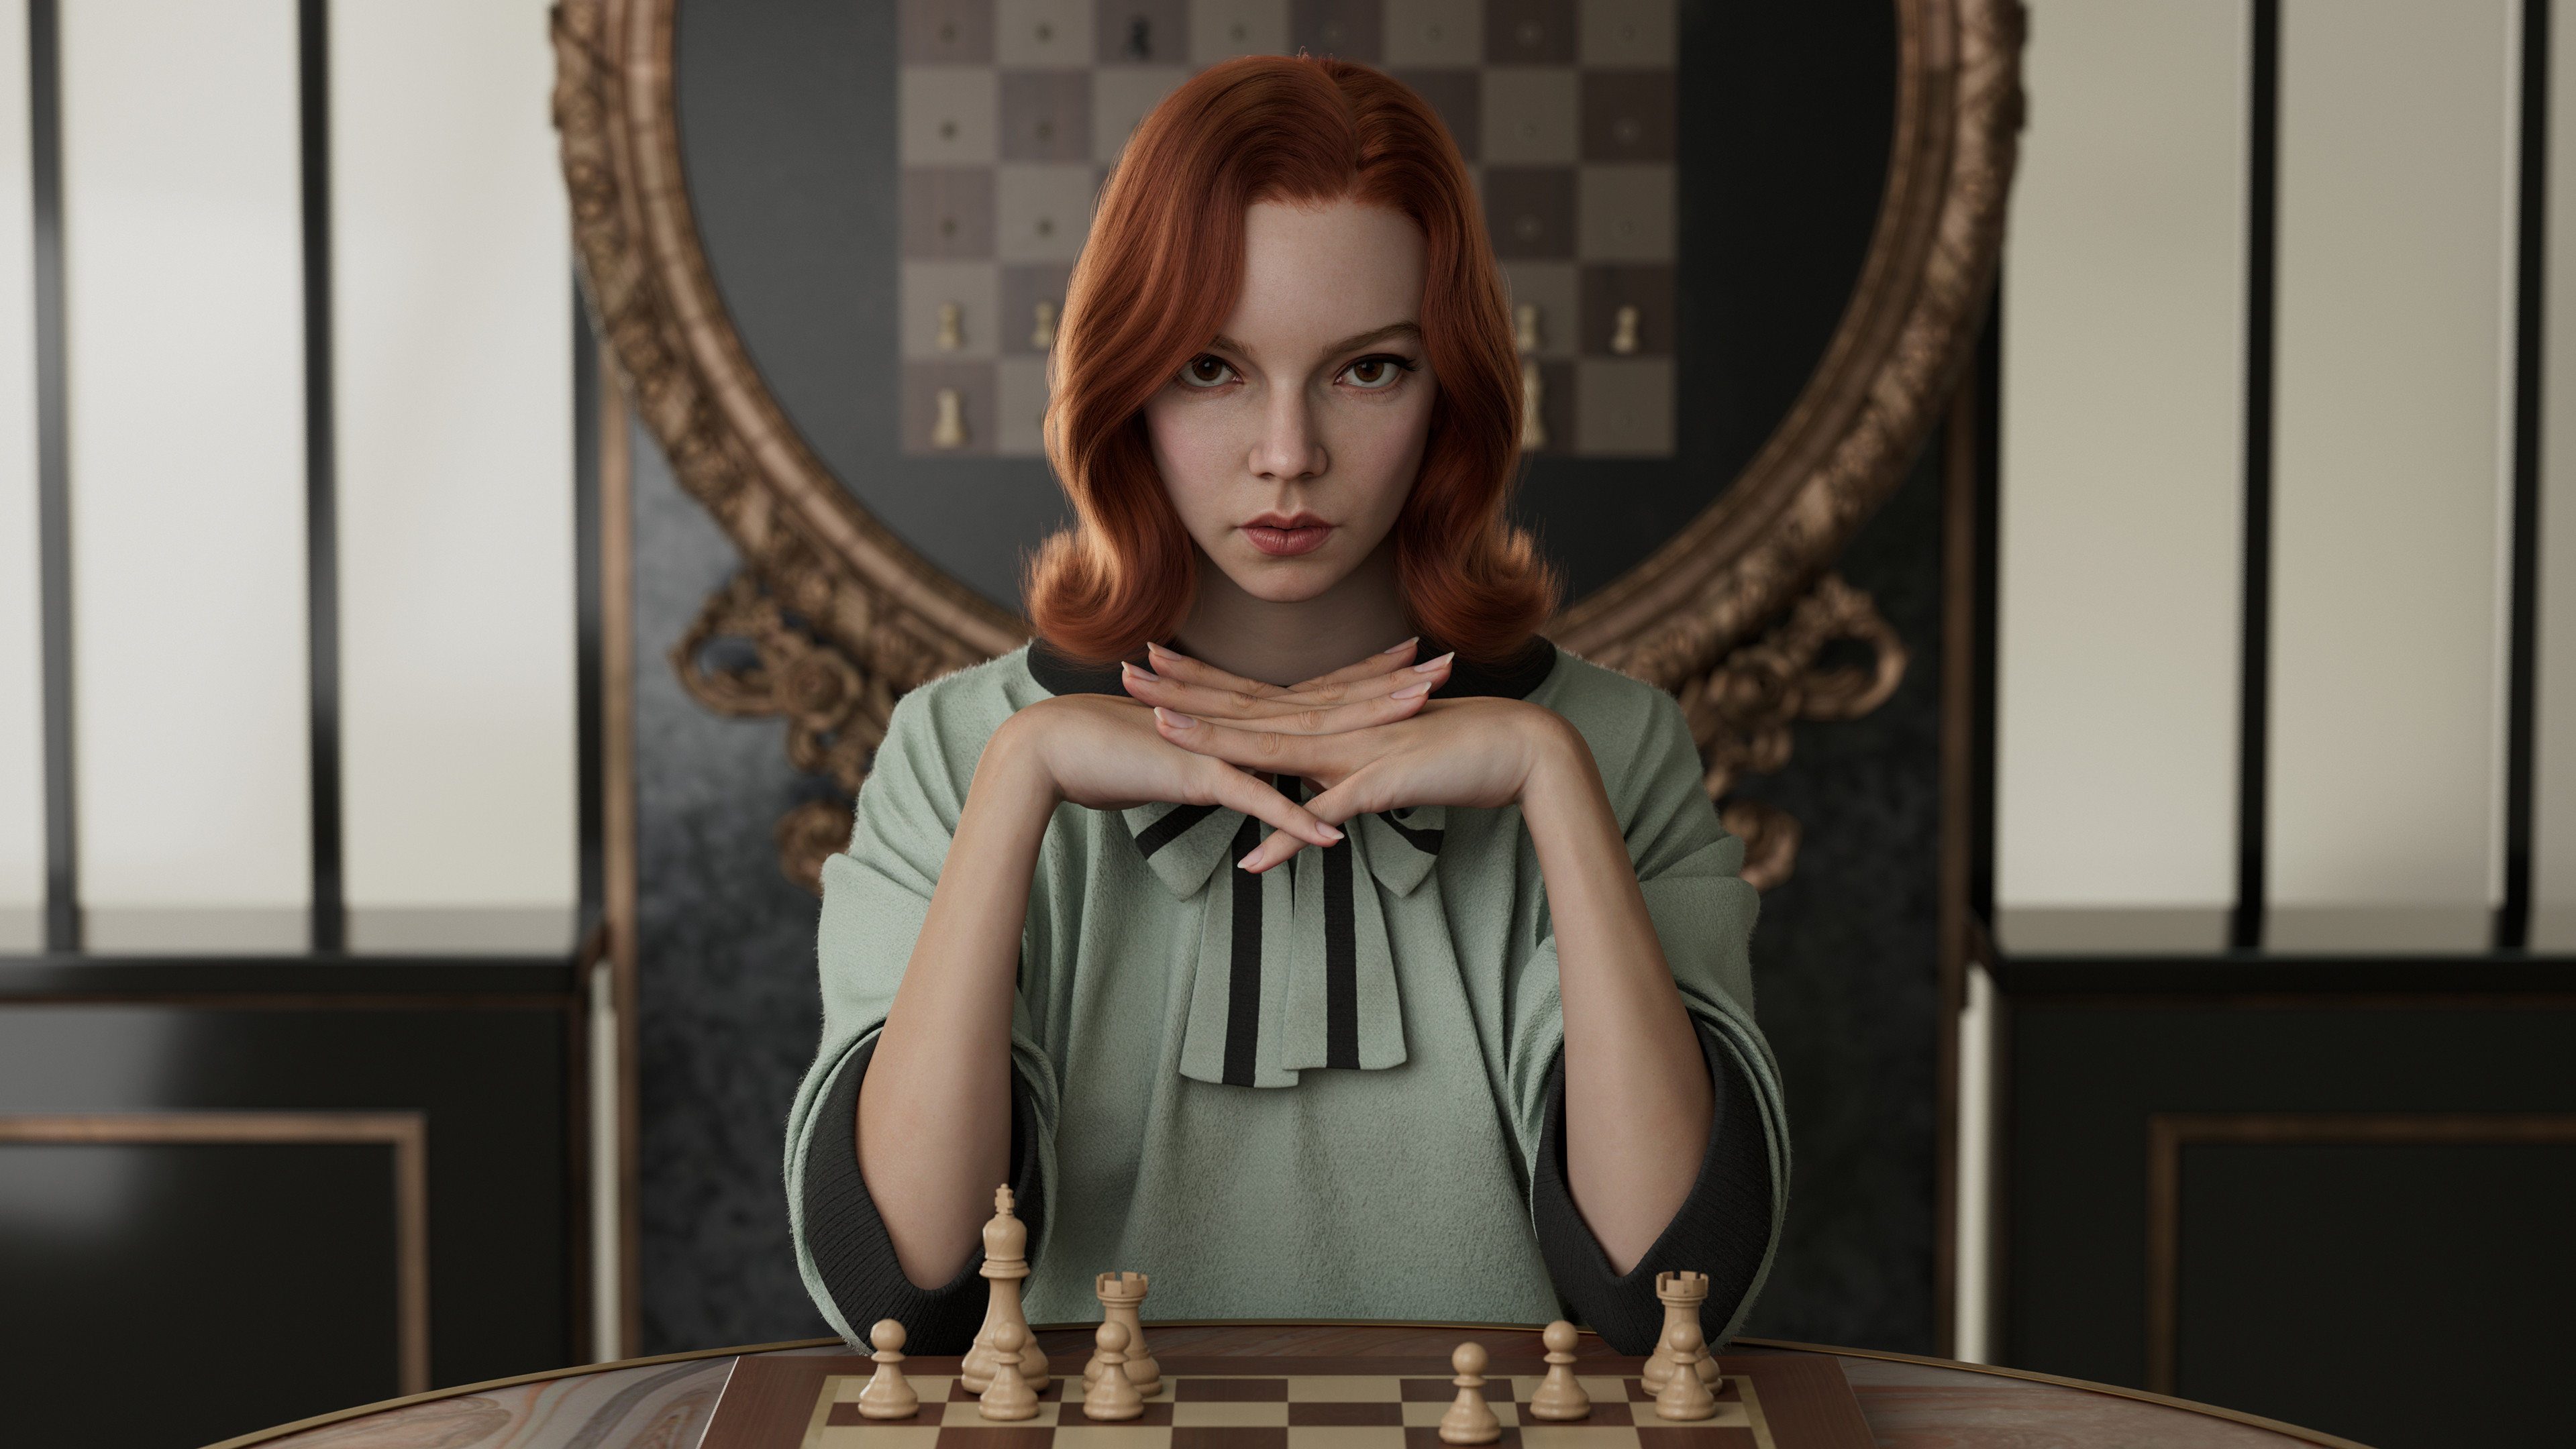 ArtStation Redhead Looking At Viewer Chess Digital Art Digital Painting Beth Harmon Fan Art Artwork  3839x2160